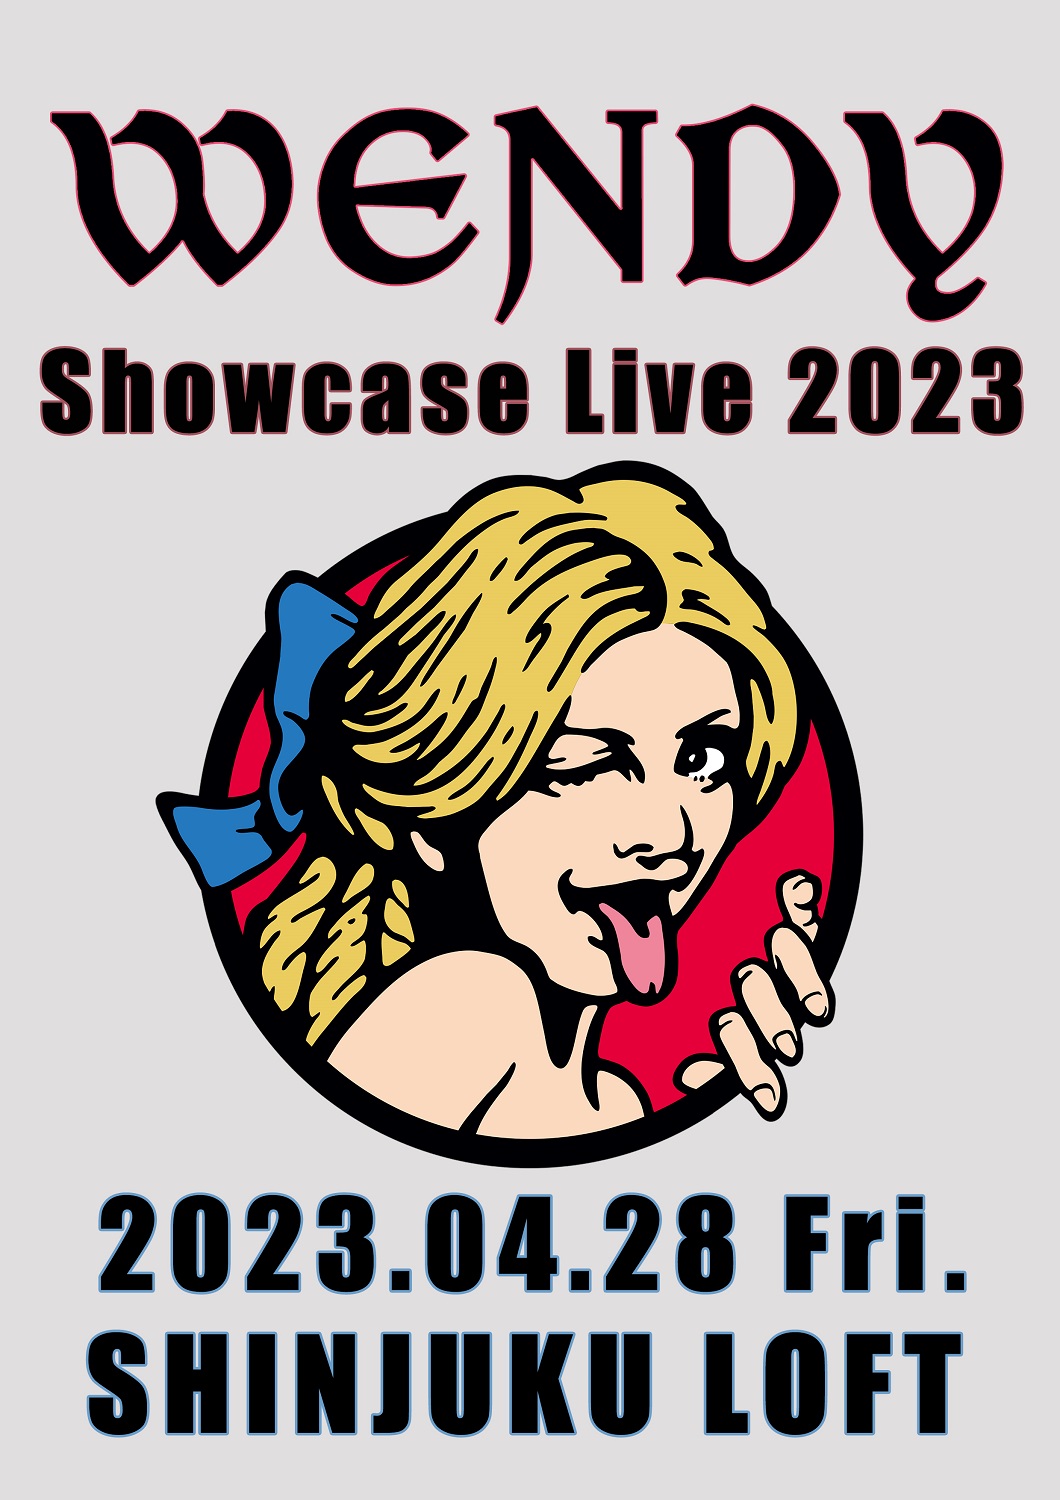 WENDYワンマンライブ「Showcase Live 2023」